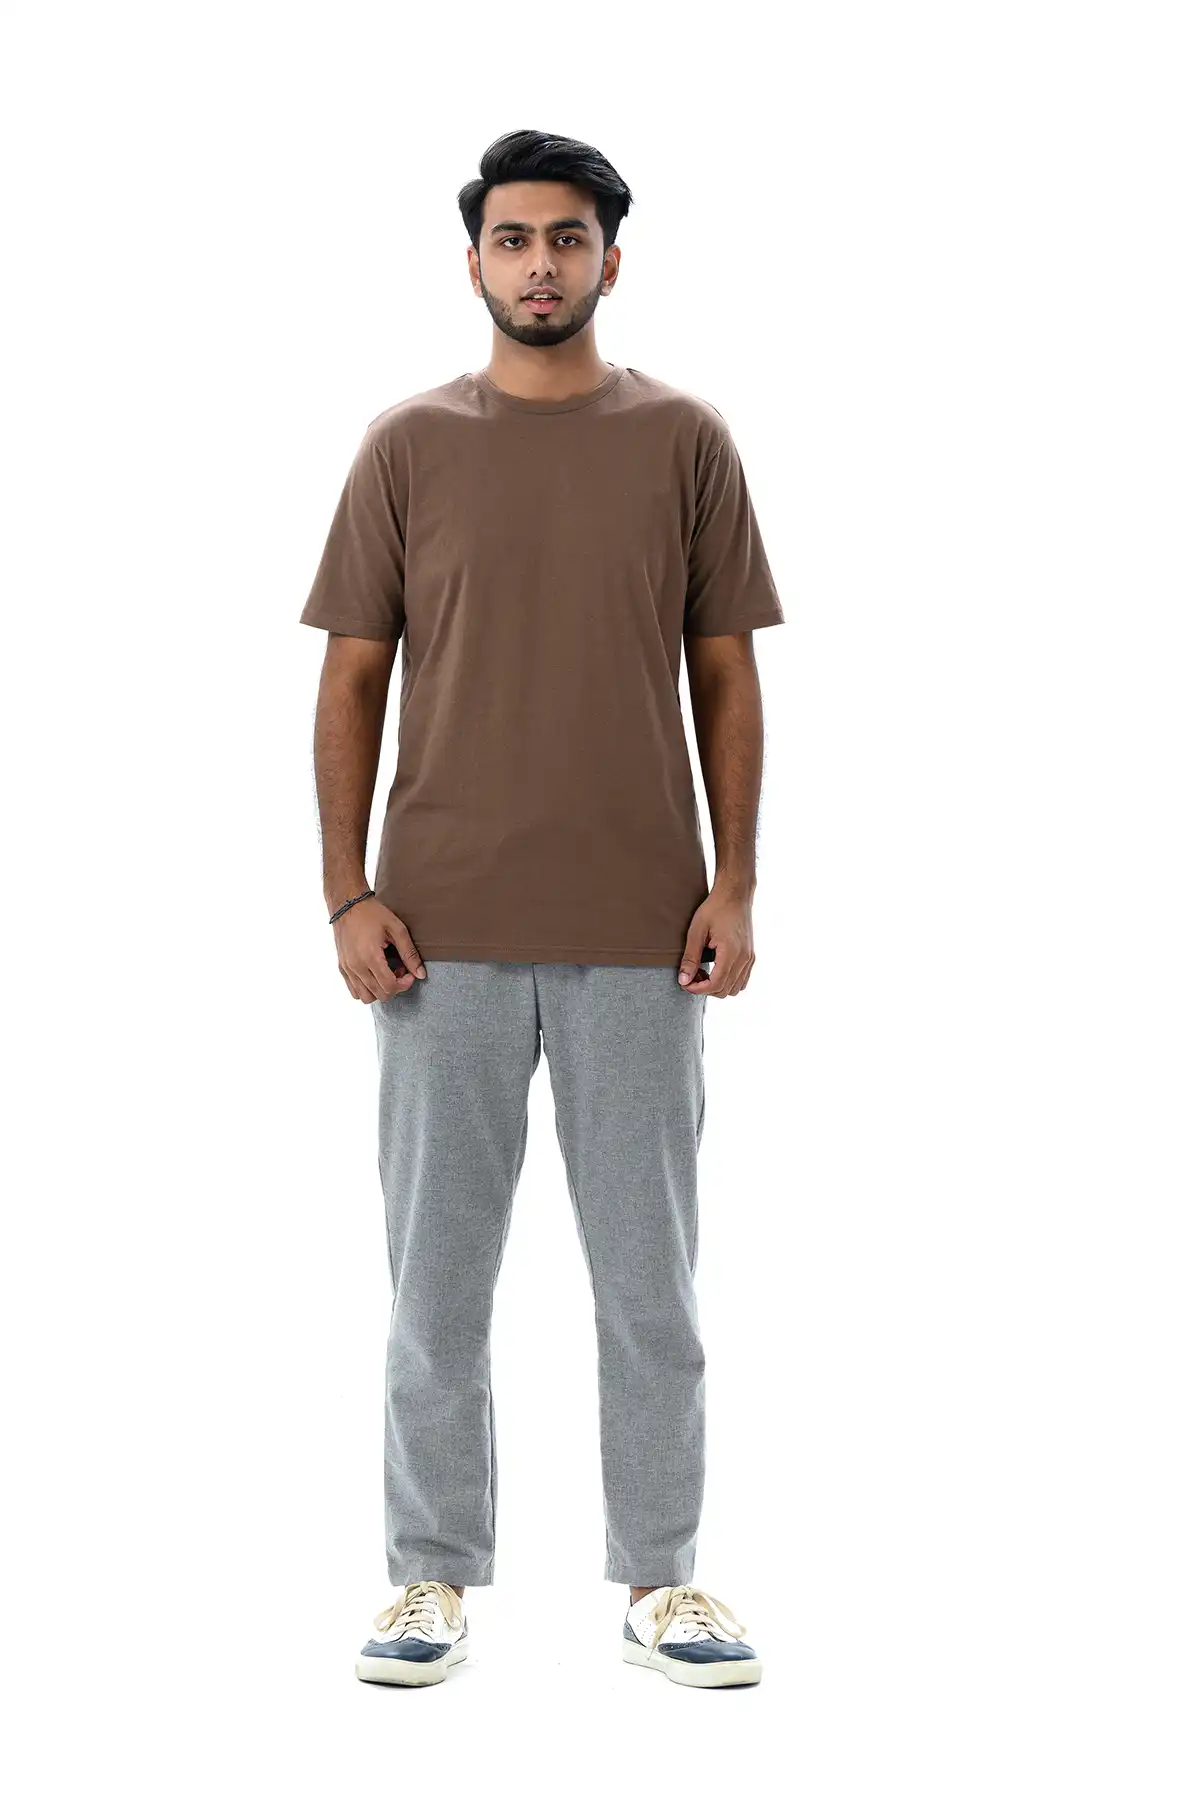 Unisex Crew Neck Cotton T-Shirt - Coco Brown